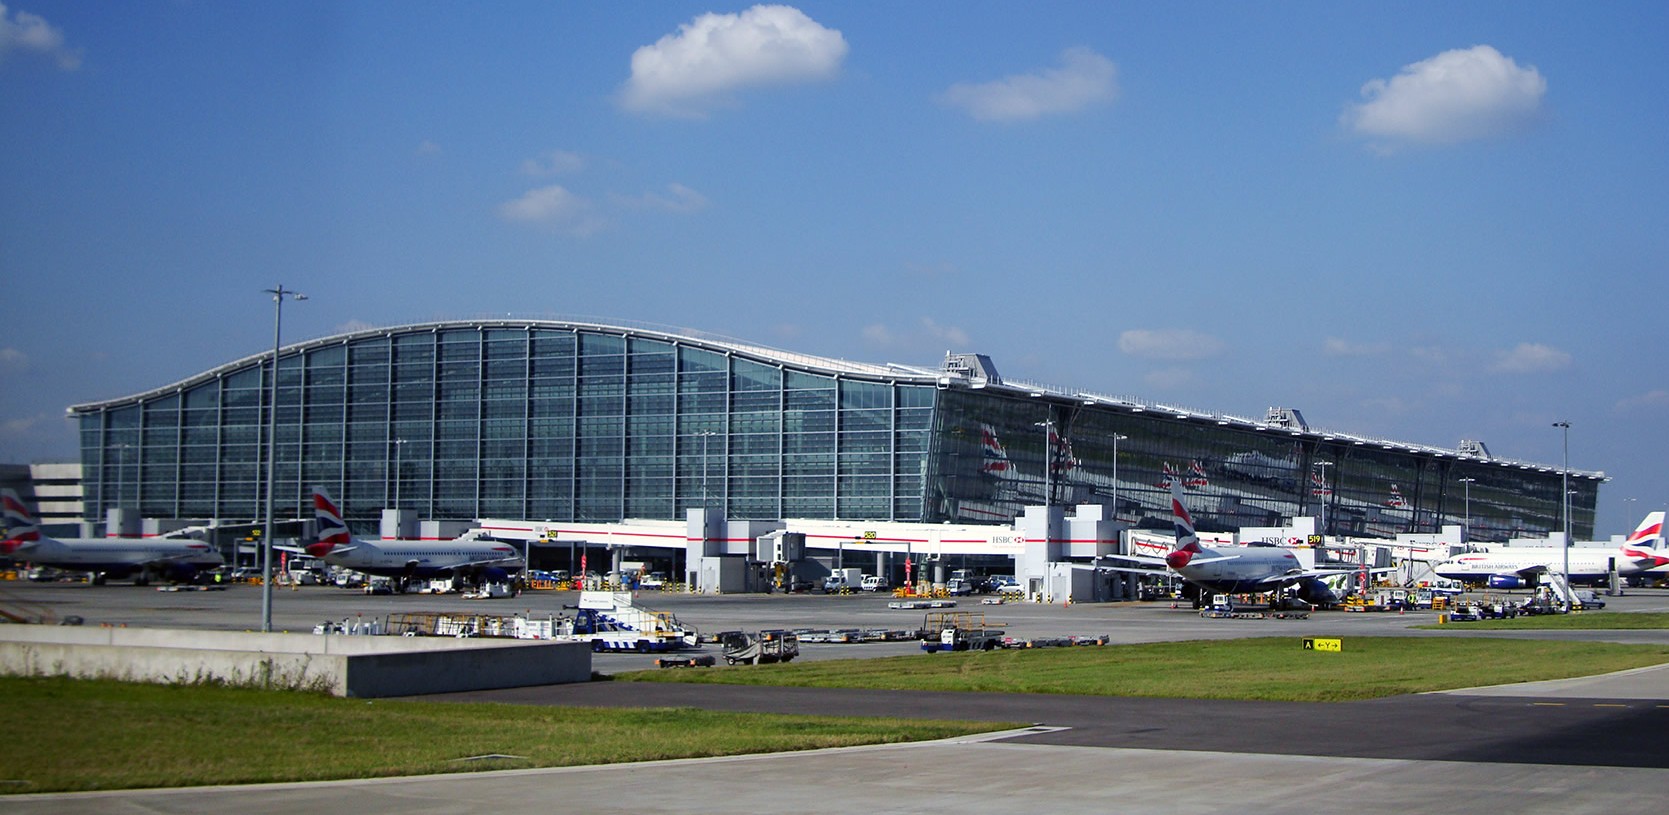 erminal de l'aeroport de Heathrow